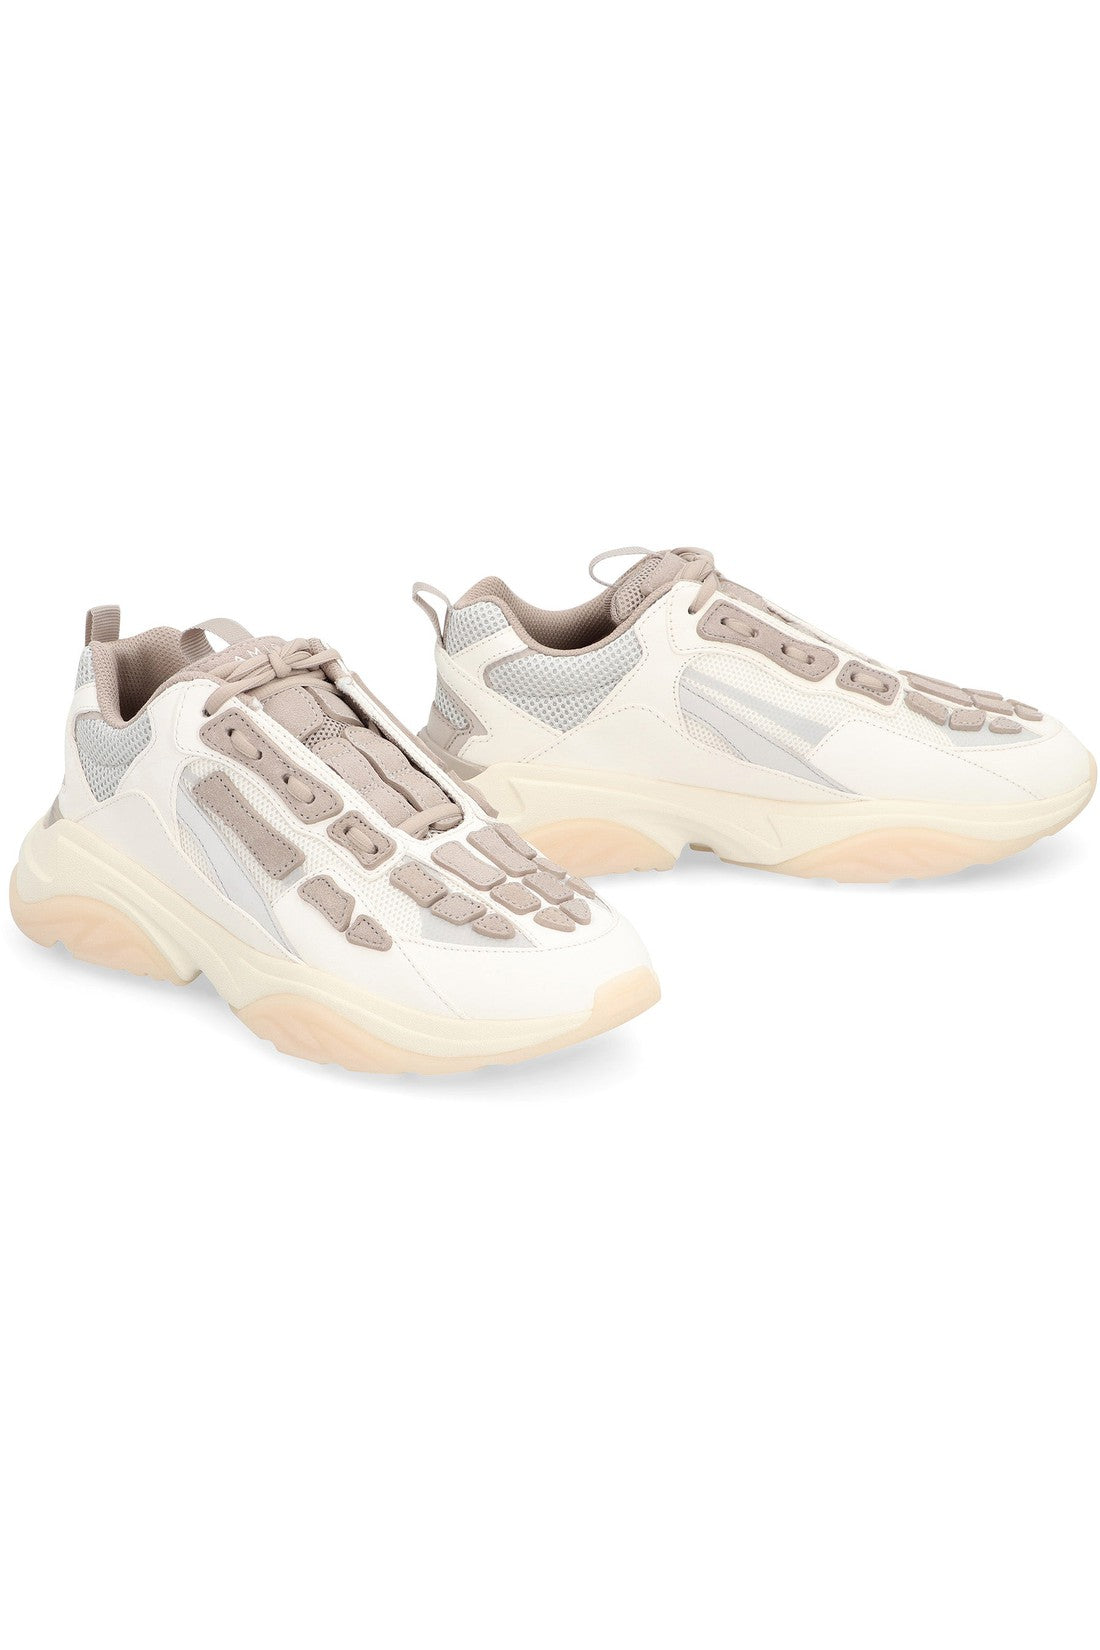 AMIRI-OUTLET-SALE-Bone Runner mesh sneakers-ARCHIVIST